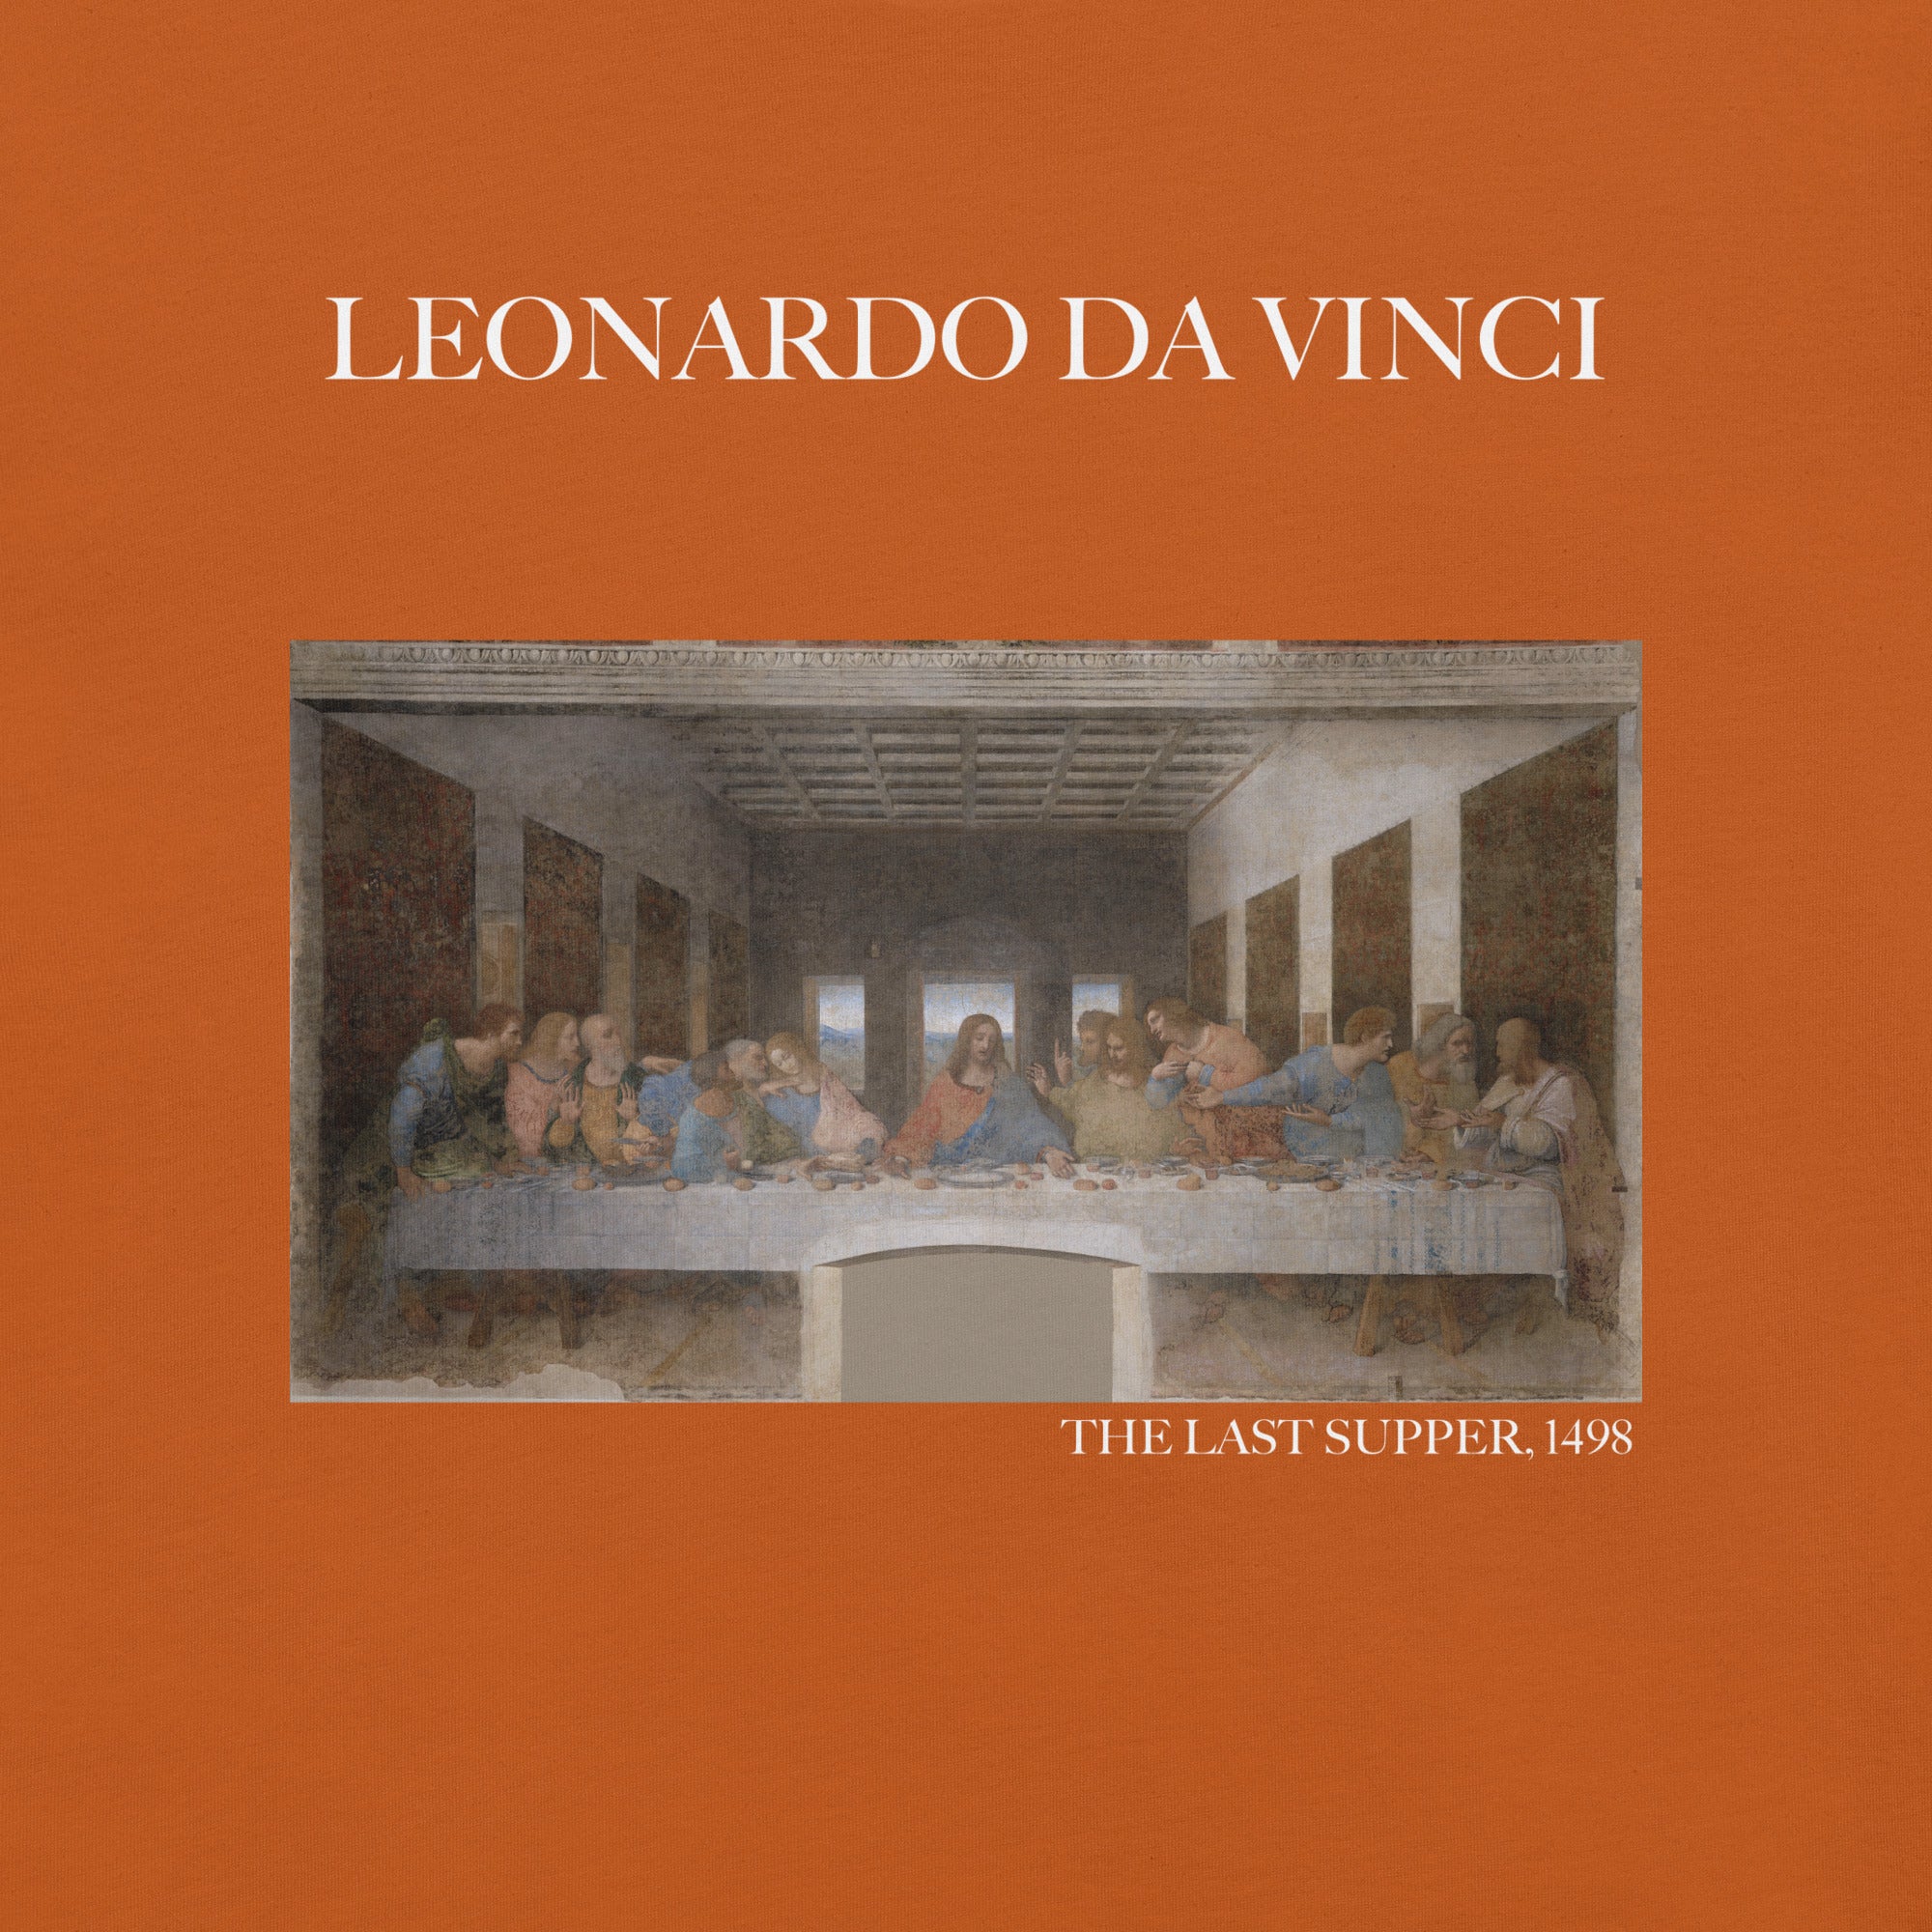 Leonardo da Vinci 'The Last Supper' Famous Painting T-Shirt | Unisex Classic Art Tee